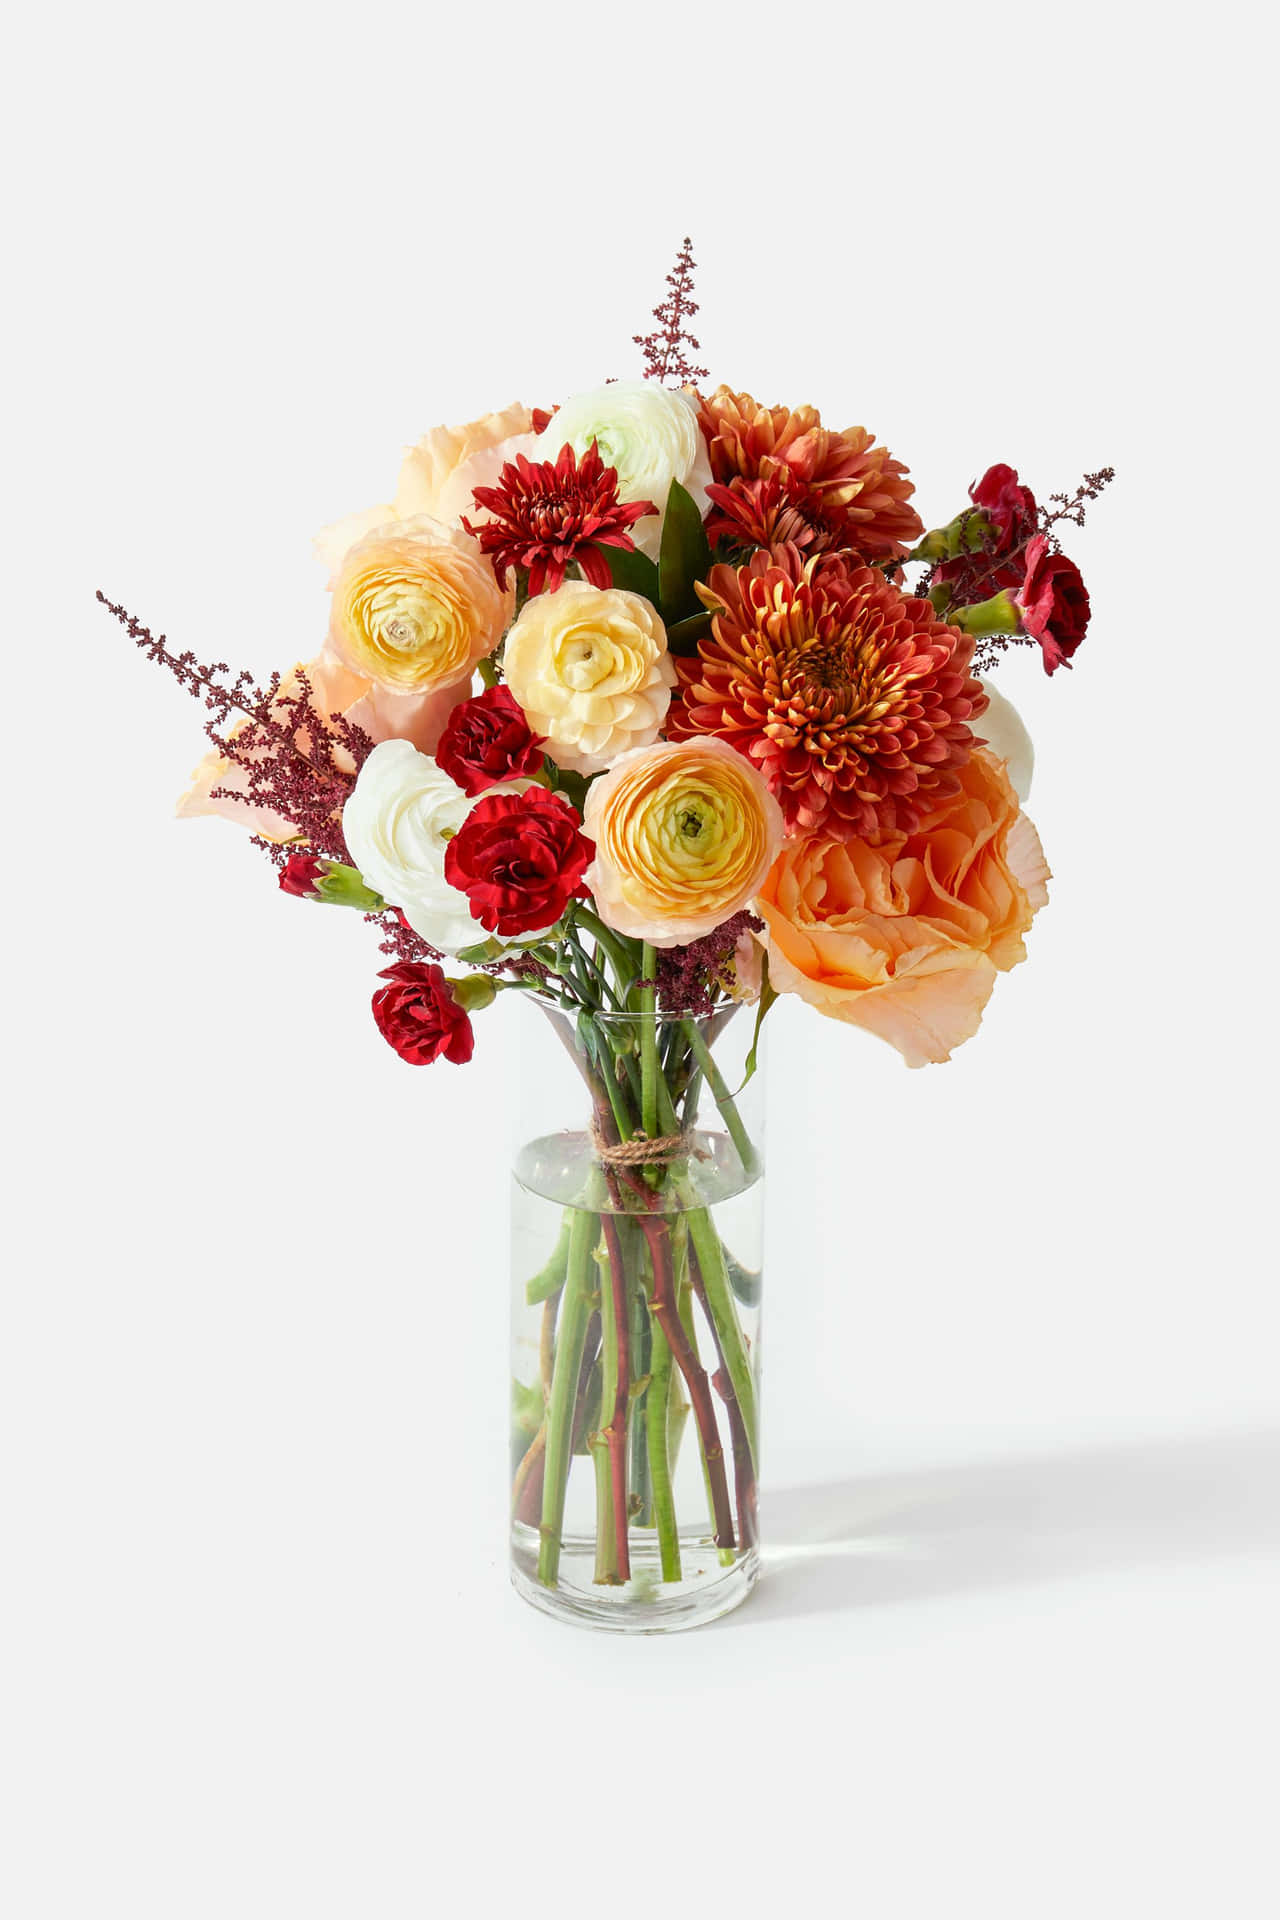 Stunning Floral Arrangement Display in a Vase Wallpaper